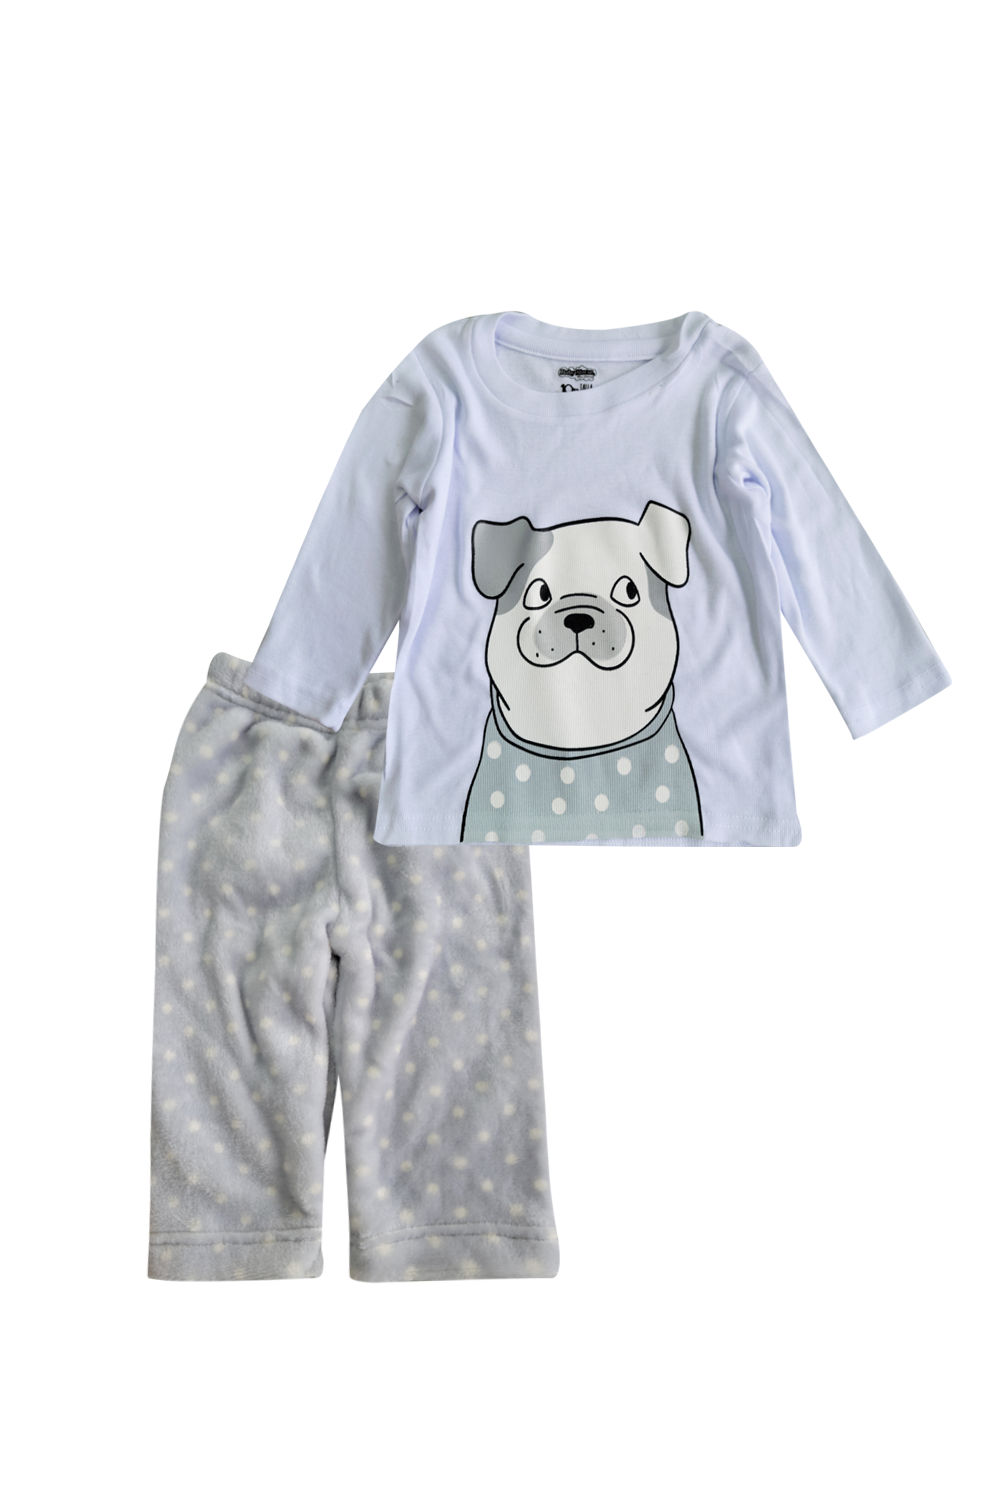 Pijama Polar 1 a 10 Años. Perro